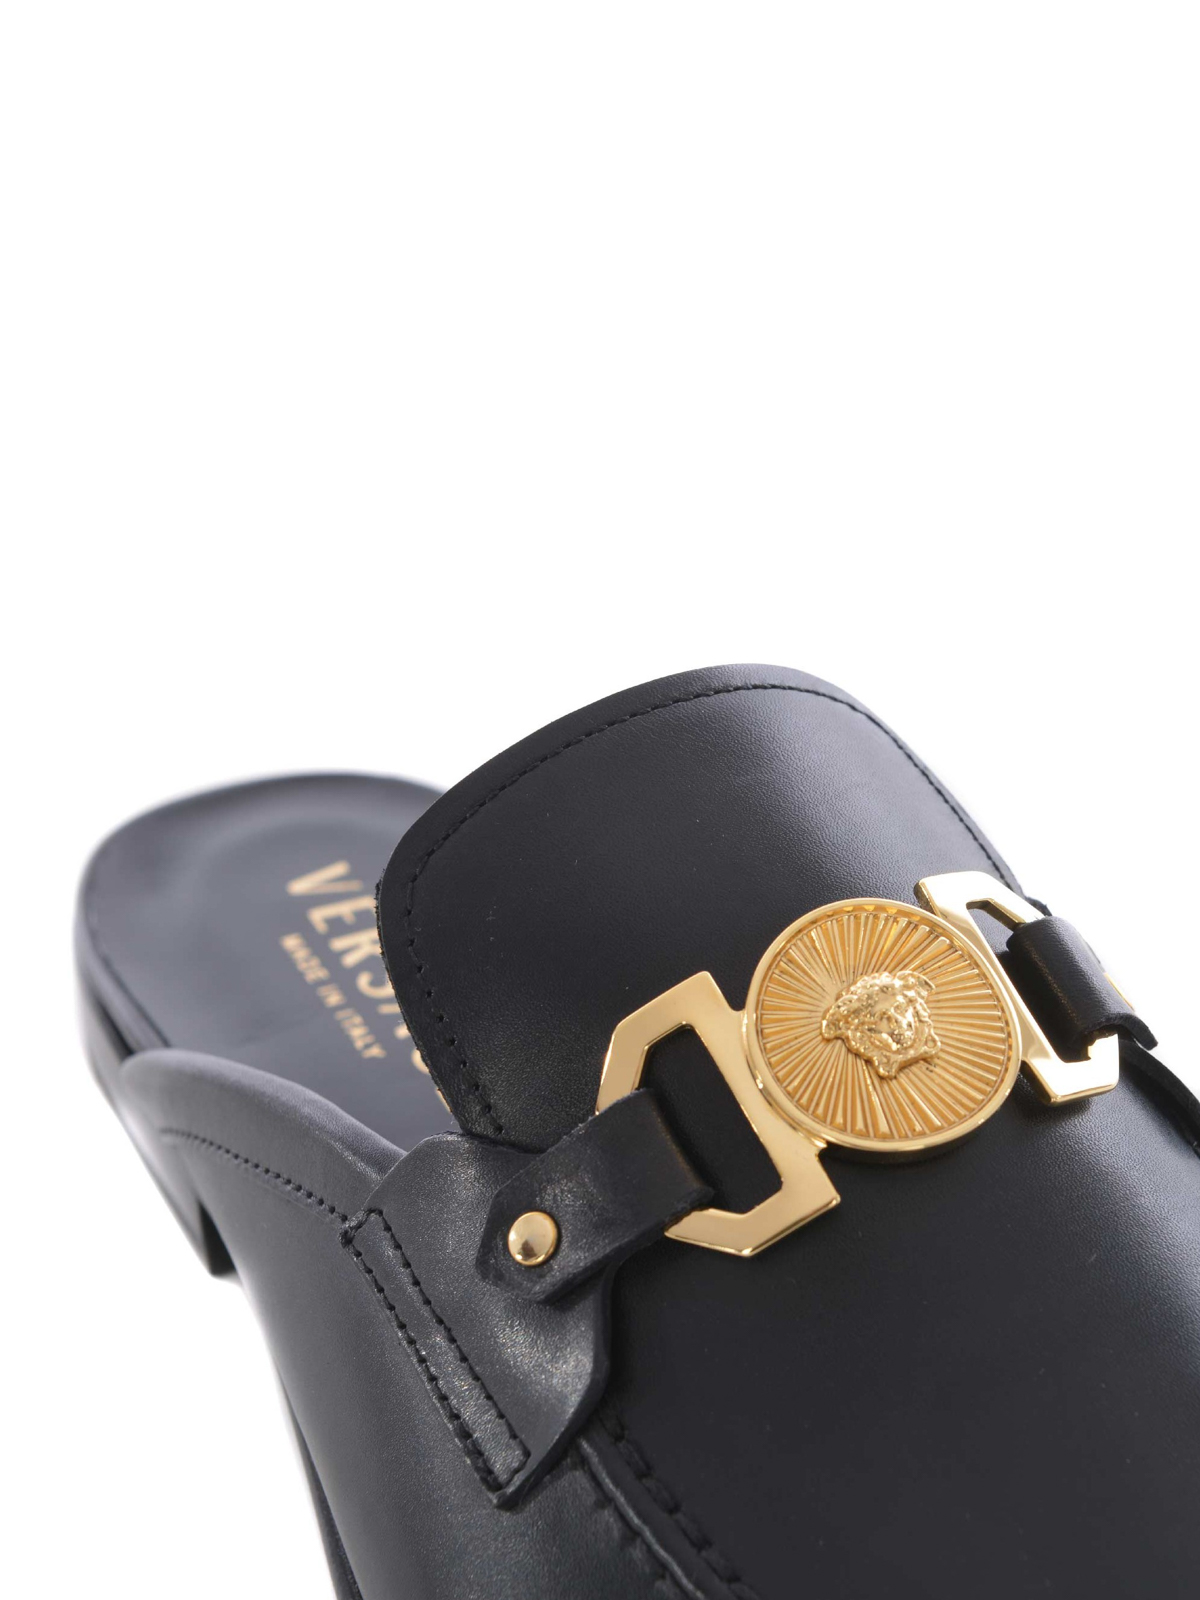 versace logo shoes